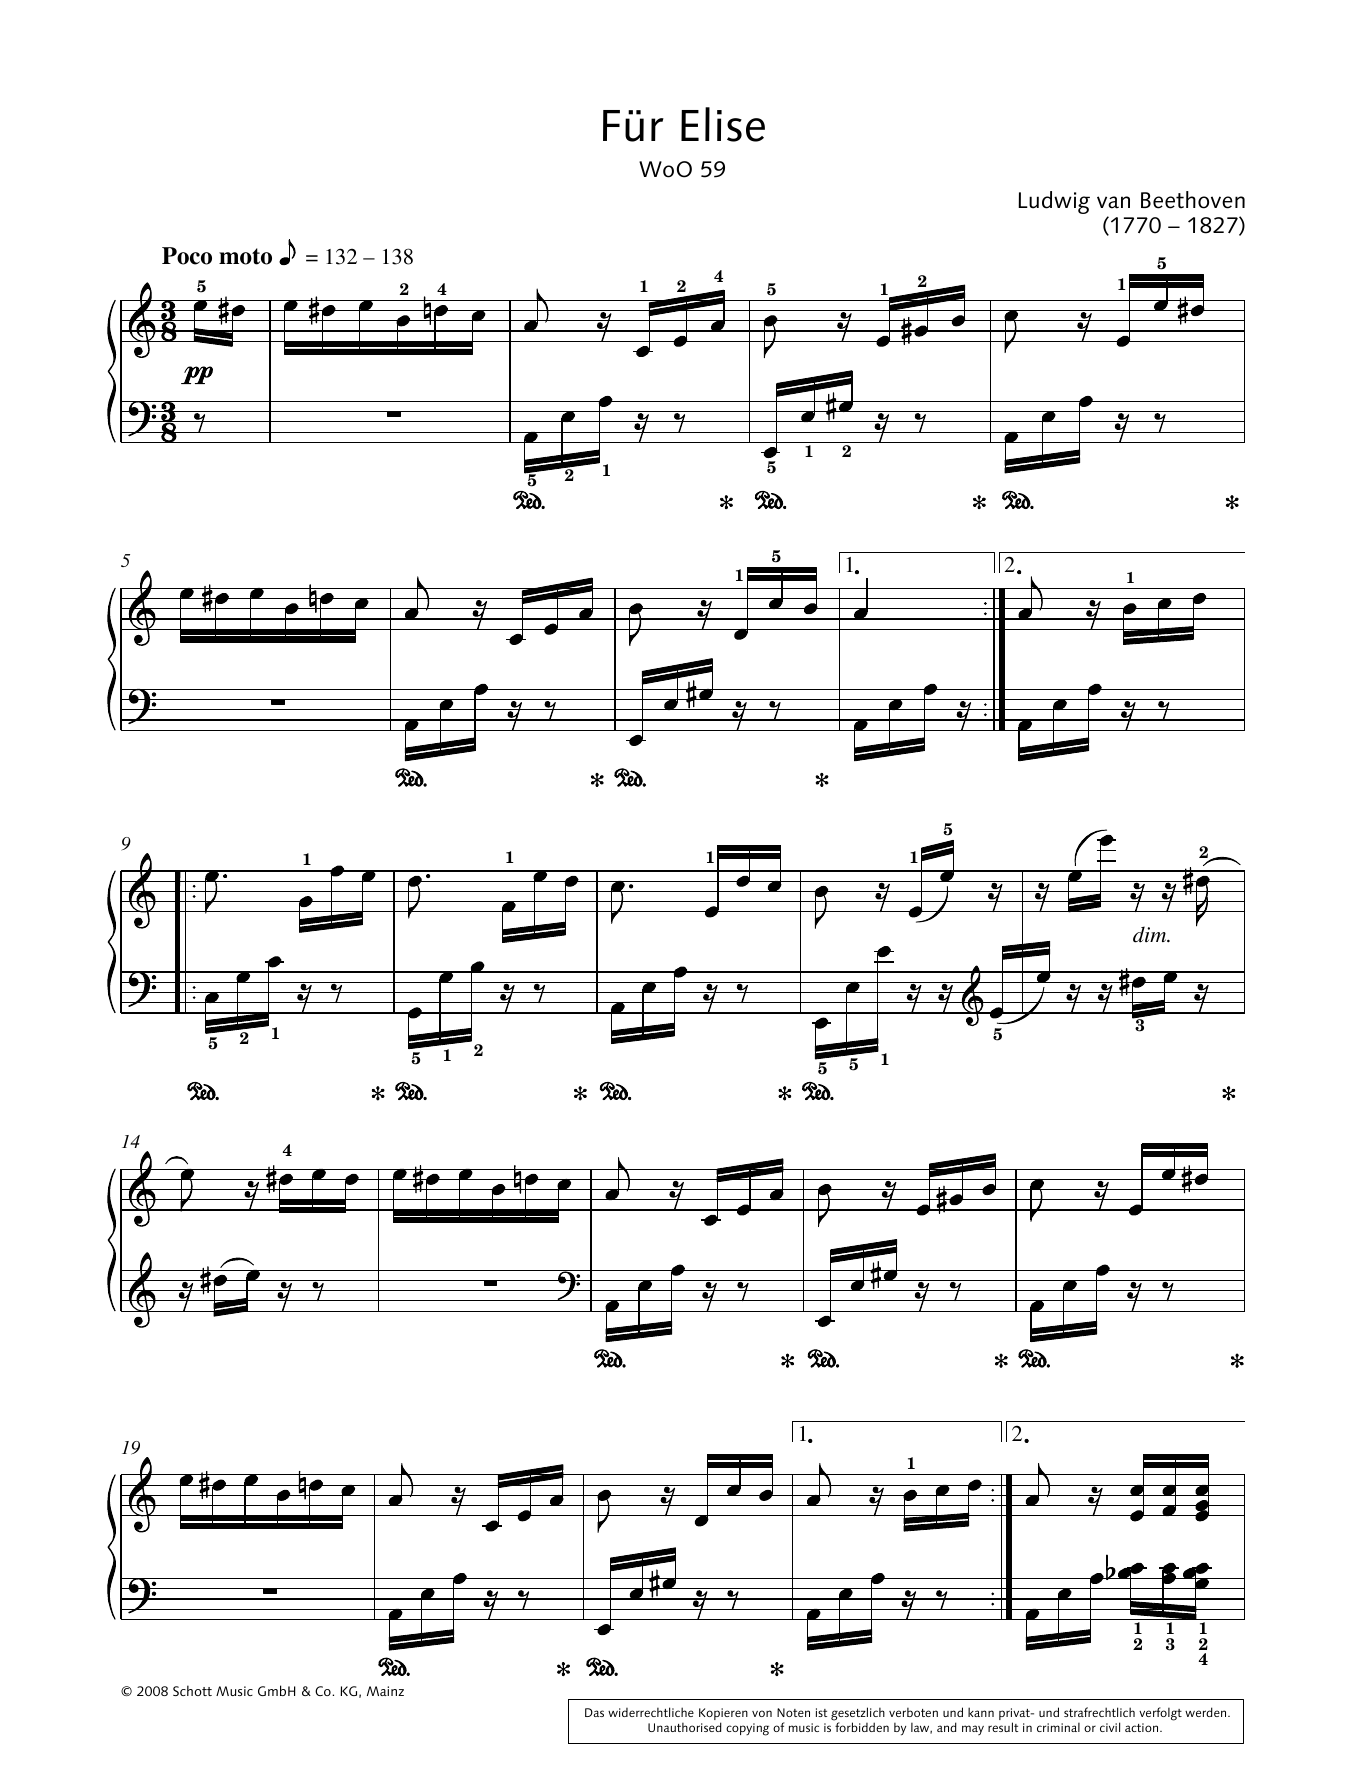 Hans-Gunter Heumann Fur Elise Sheet Music Notes & Chords for Piano Solo - Download or Print PDF